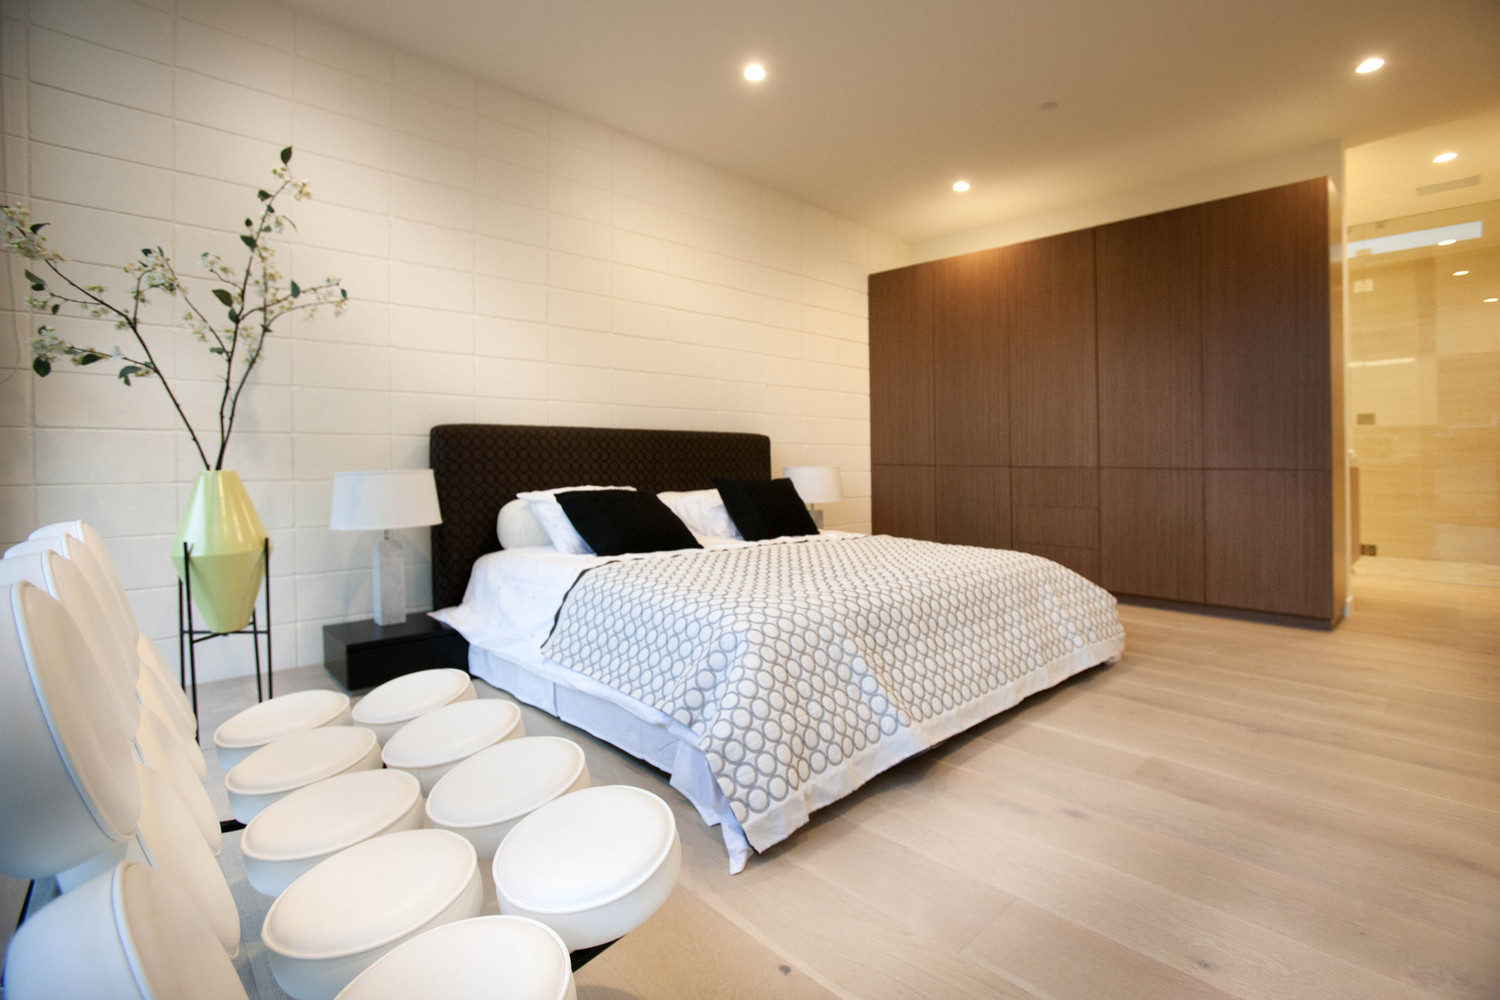 General 1500x1000 bed bedroom interior interior design modern